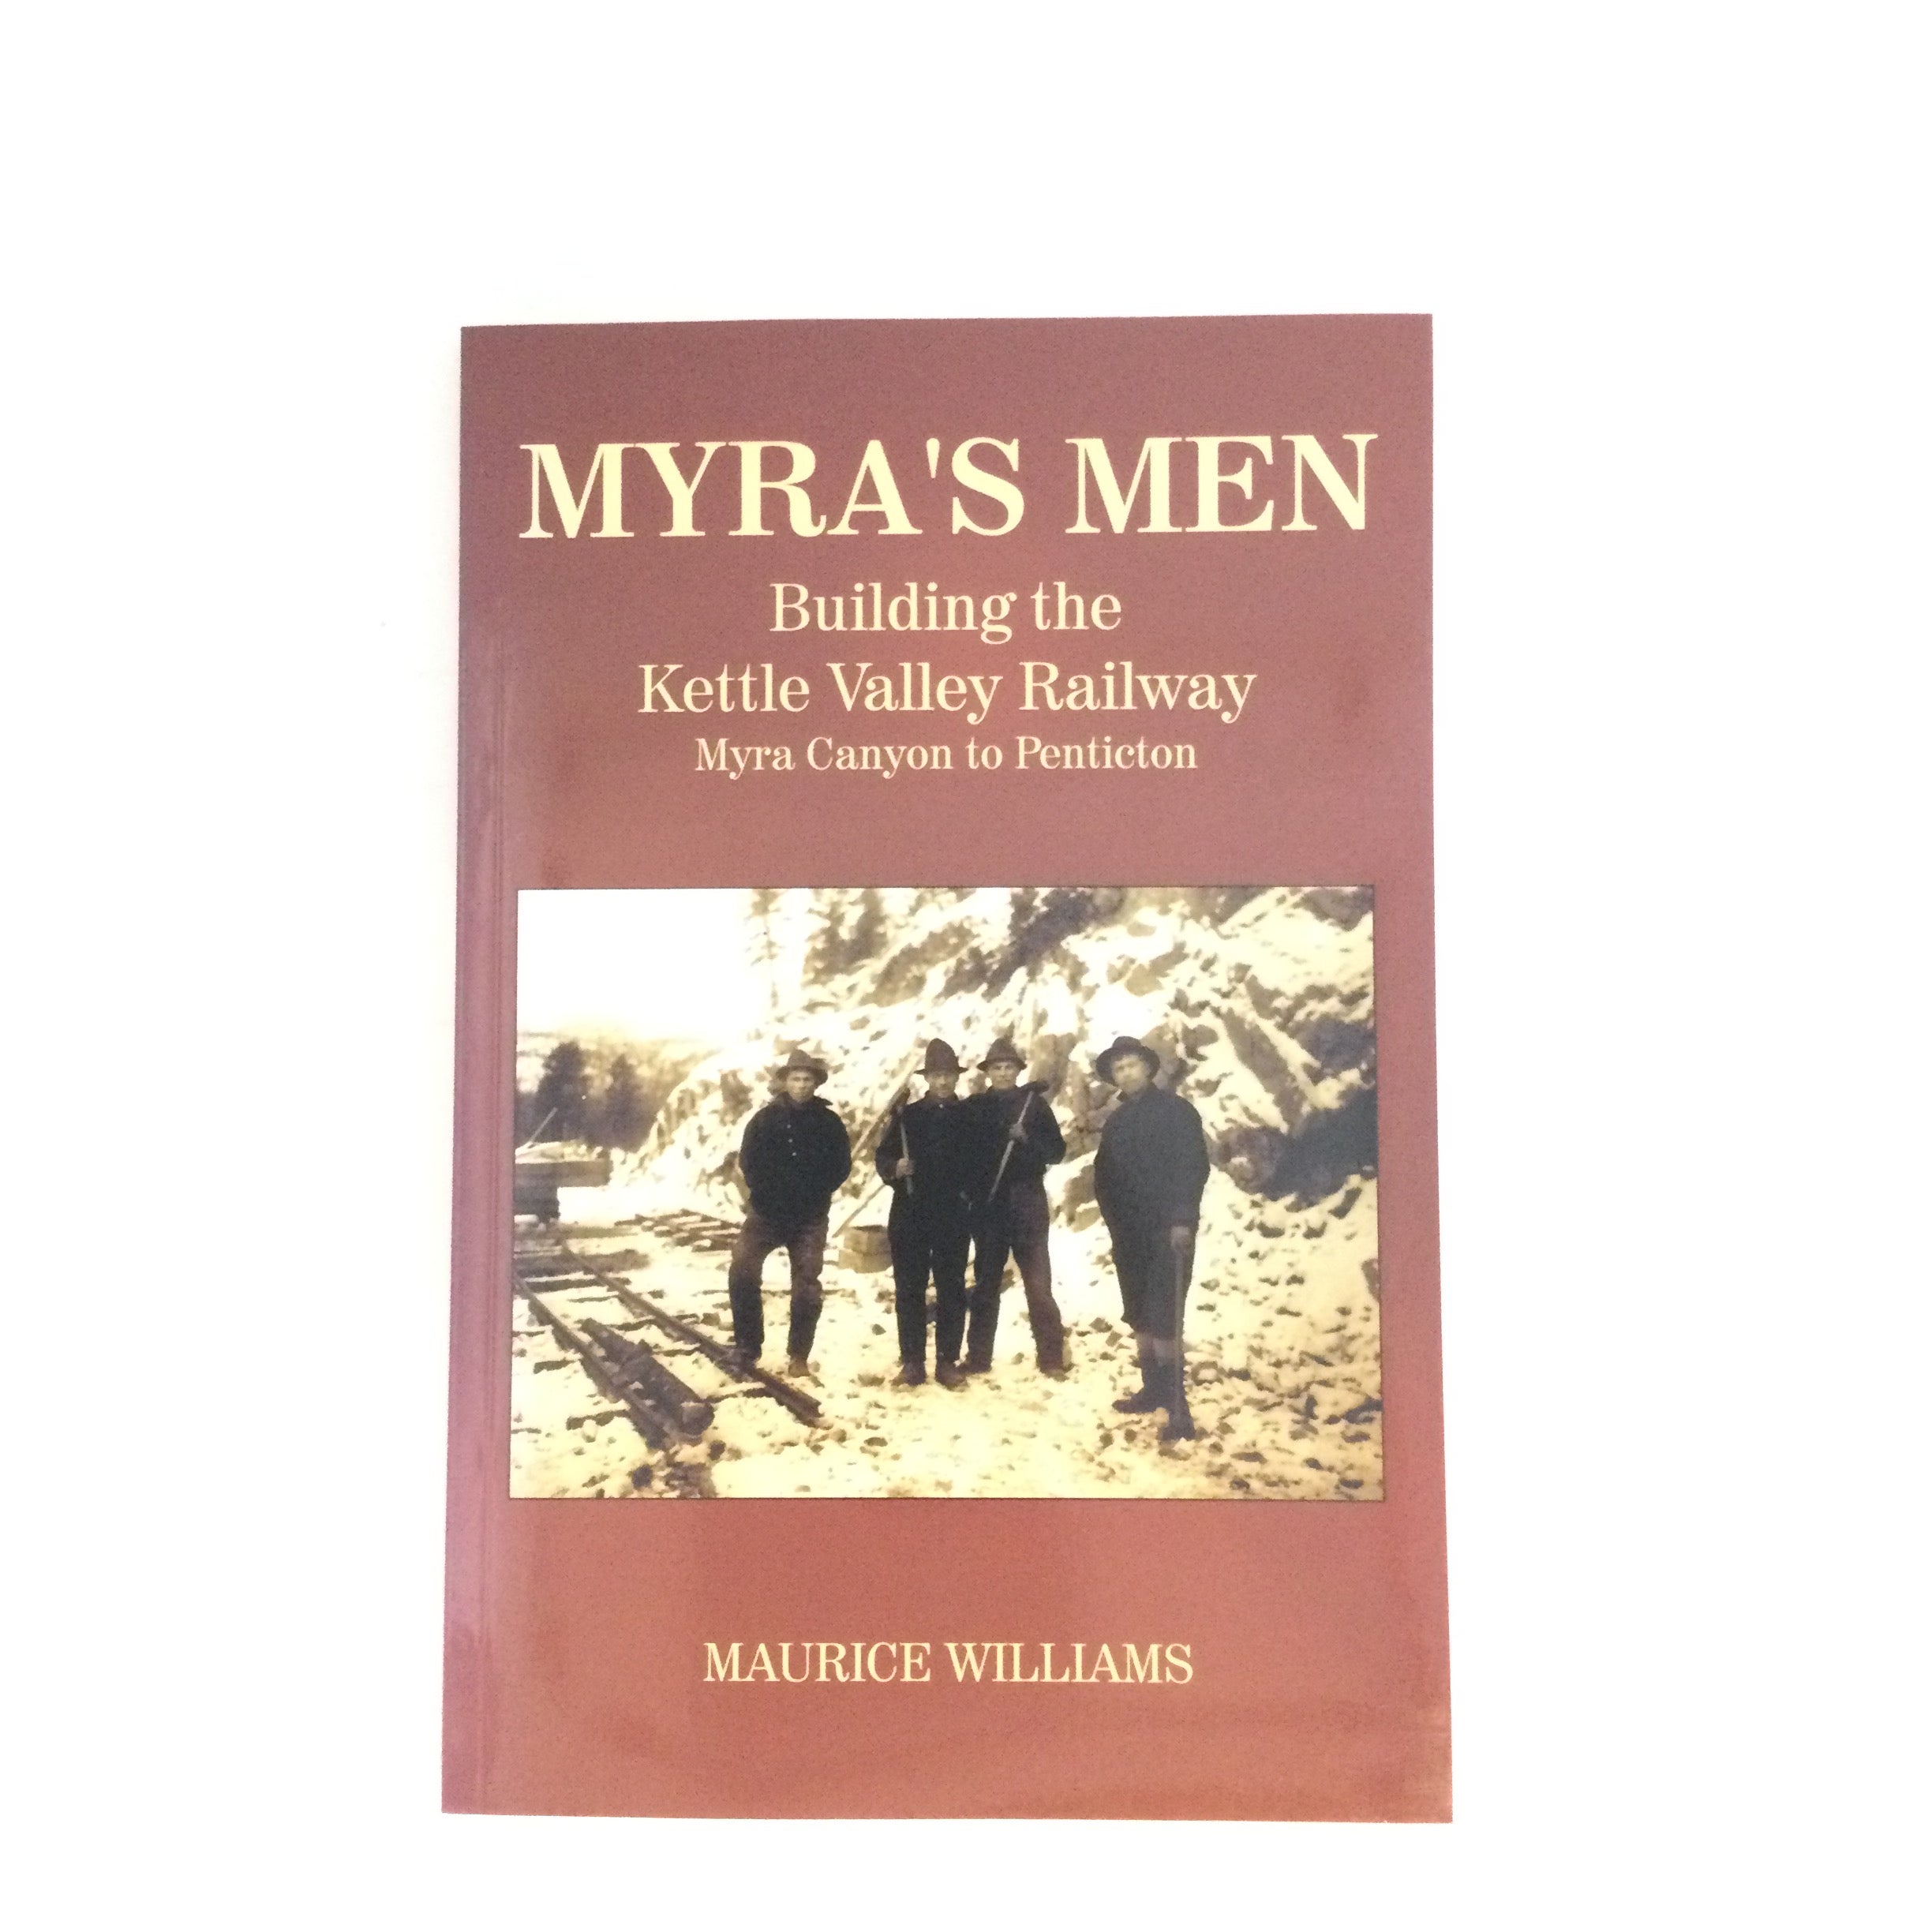 Myra's Men: Building the Kettle Valley Railway